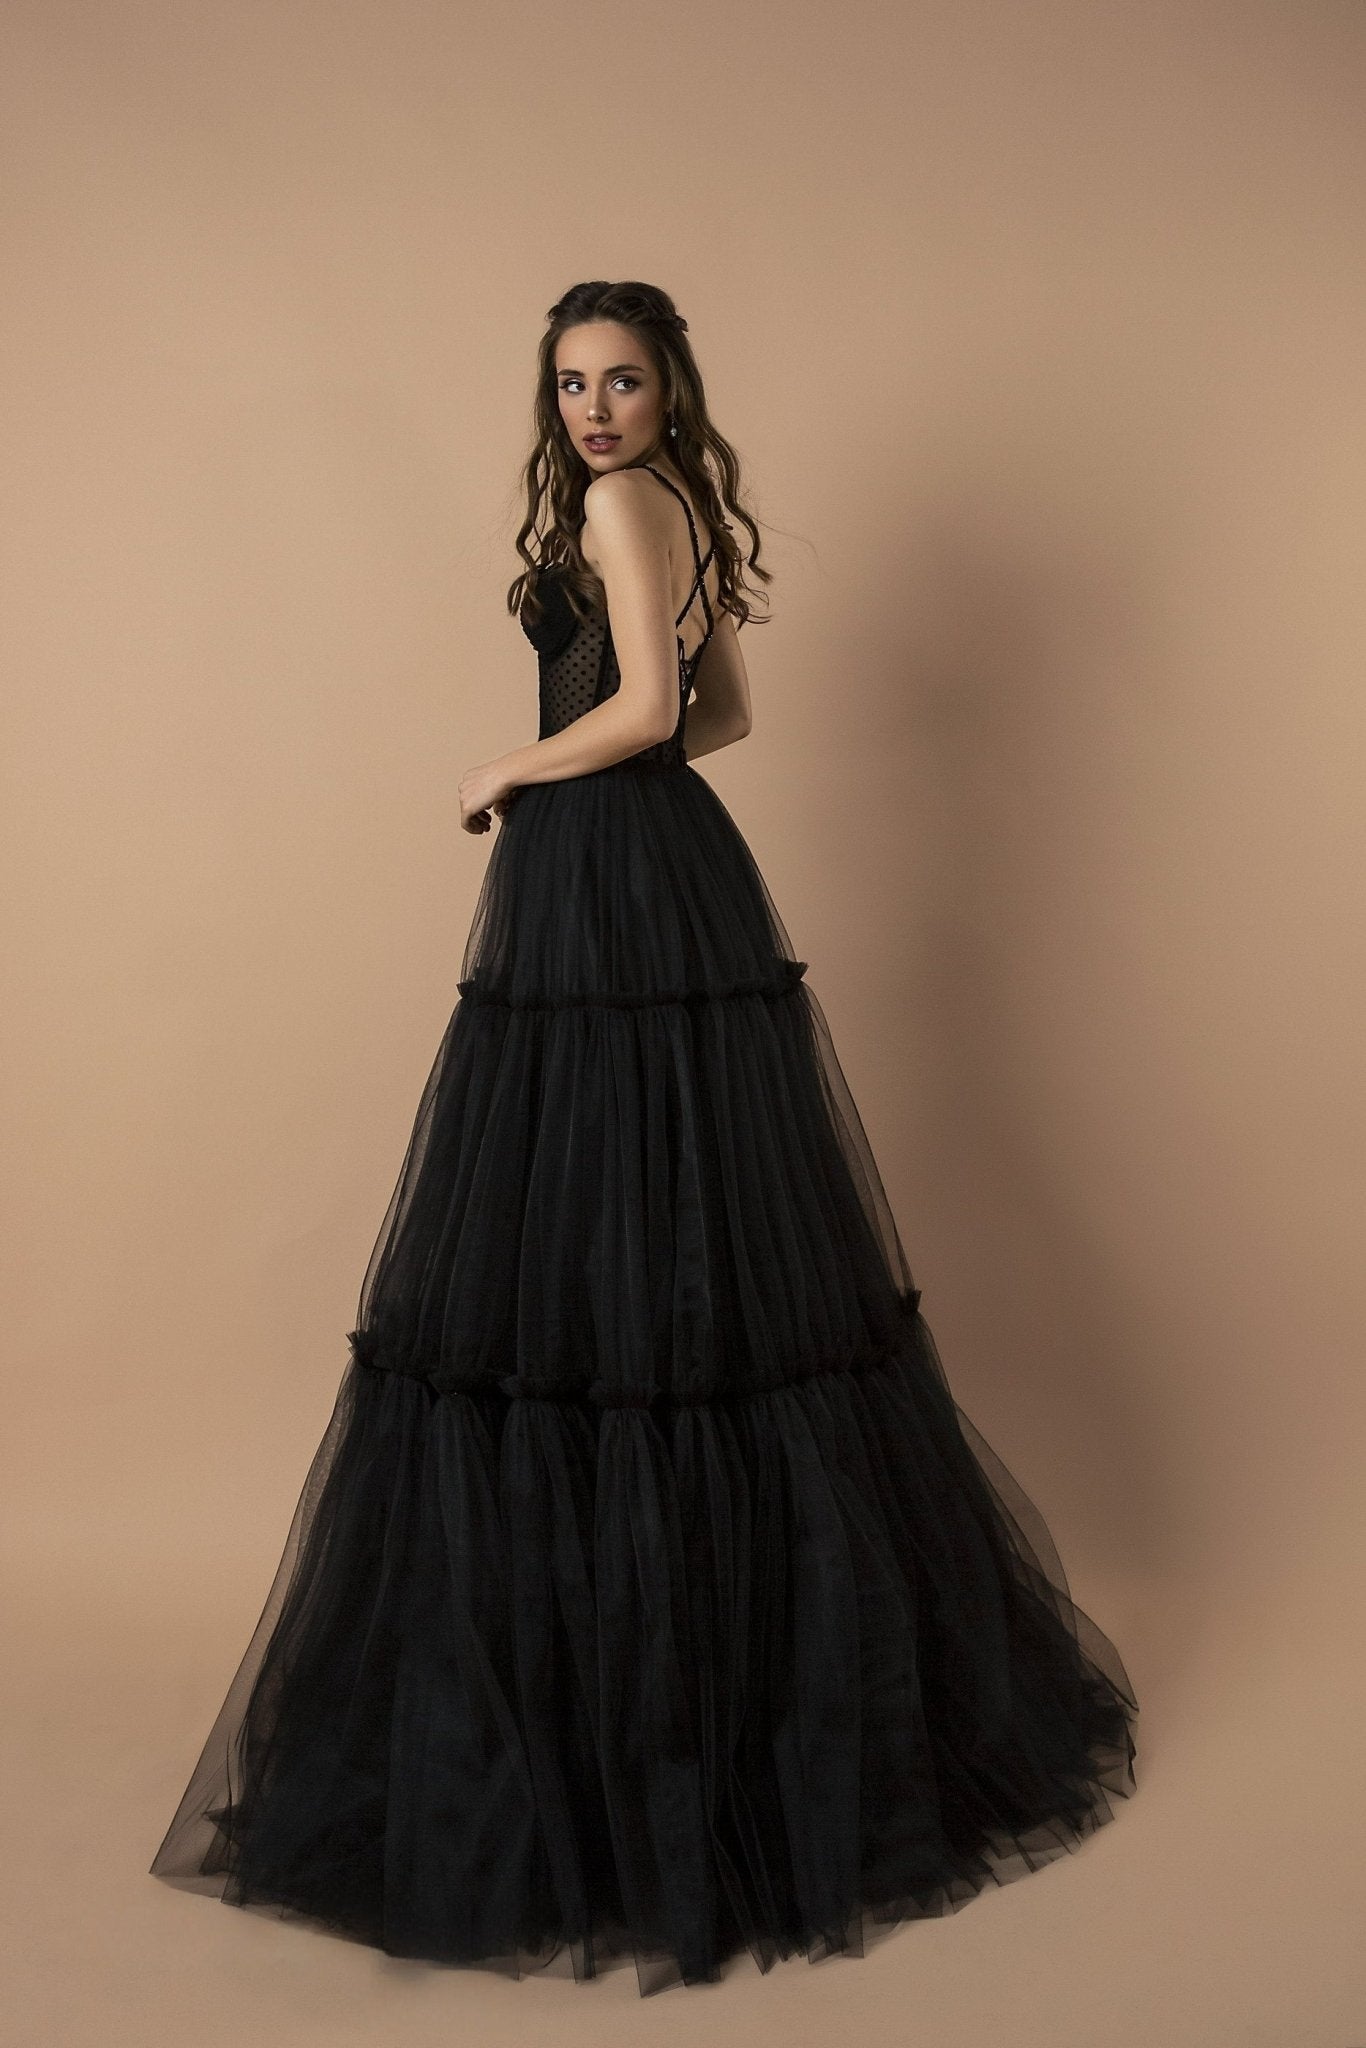 Luxe Black Gothic Tulle Wedding Gown with Sleeveless Polka Dot Bodice and Spaghetti Straps - WonderlandByLilian